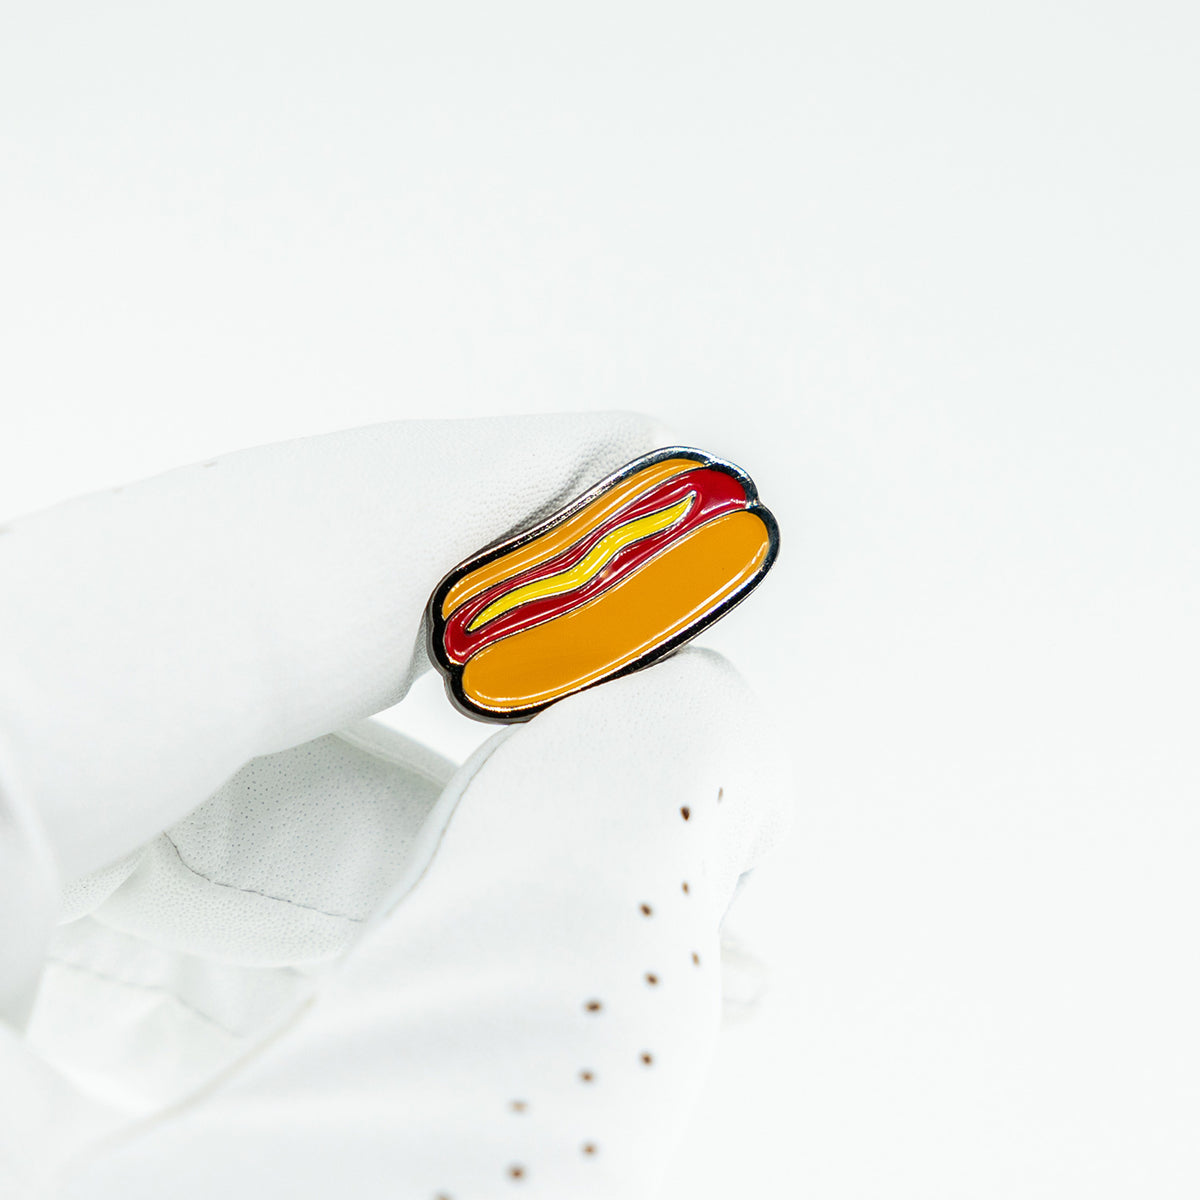 hot dog golf ball marker matchstick in white golf glove